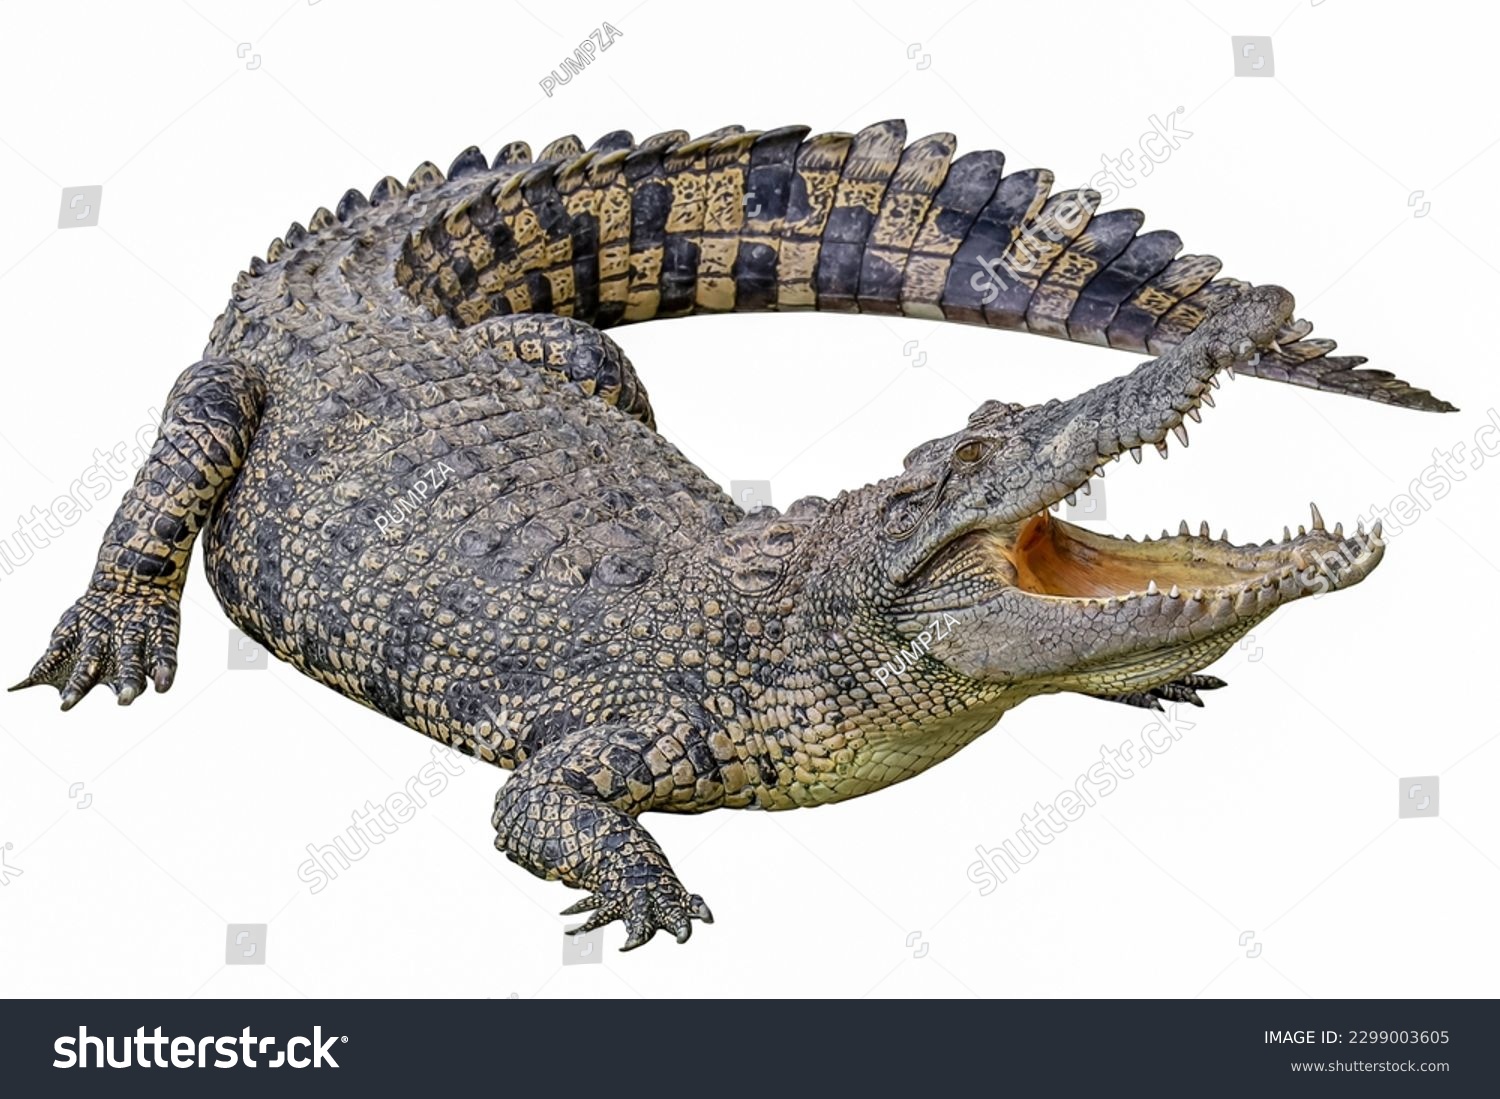 Thousand crocodile big royalty